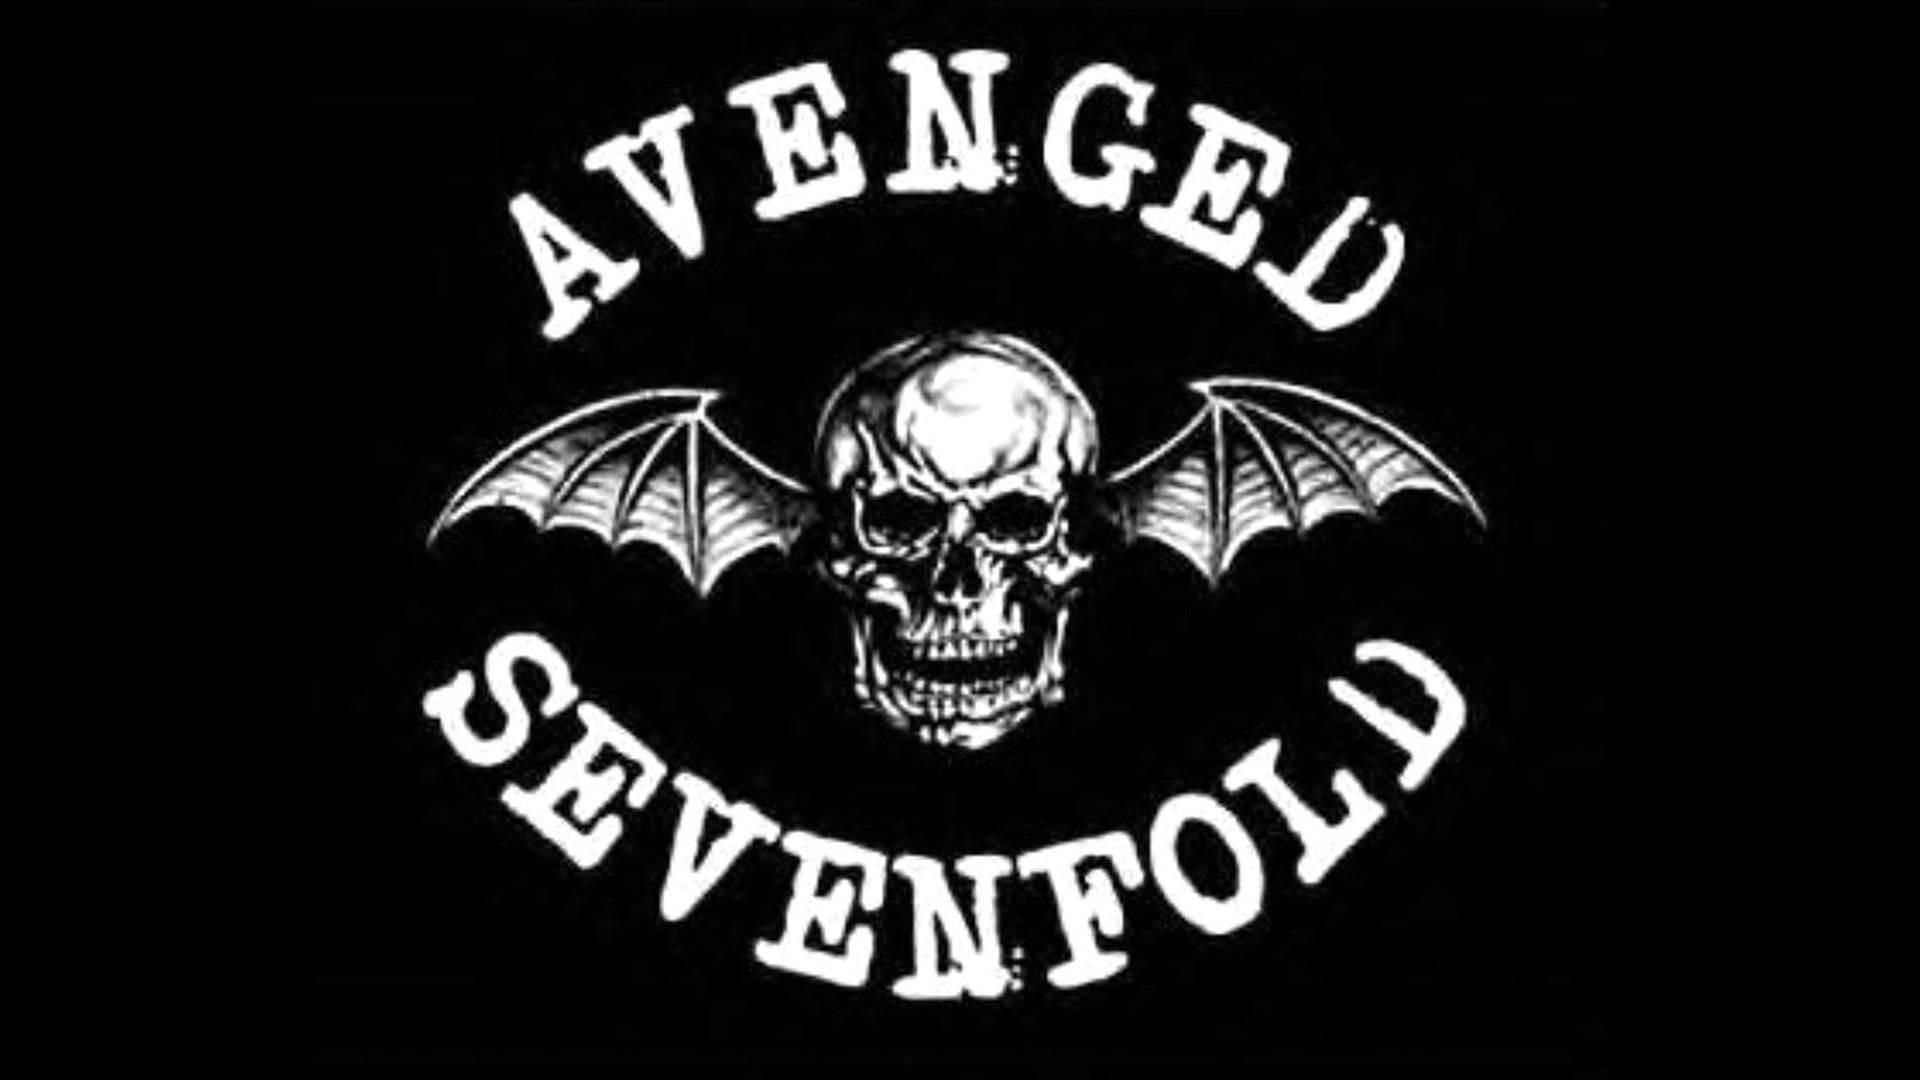 download lagu mp3 avenged sevenfold seize day